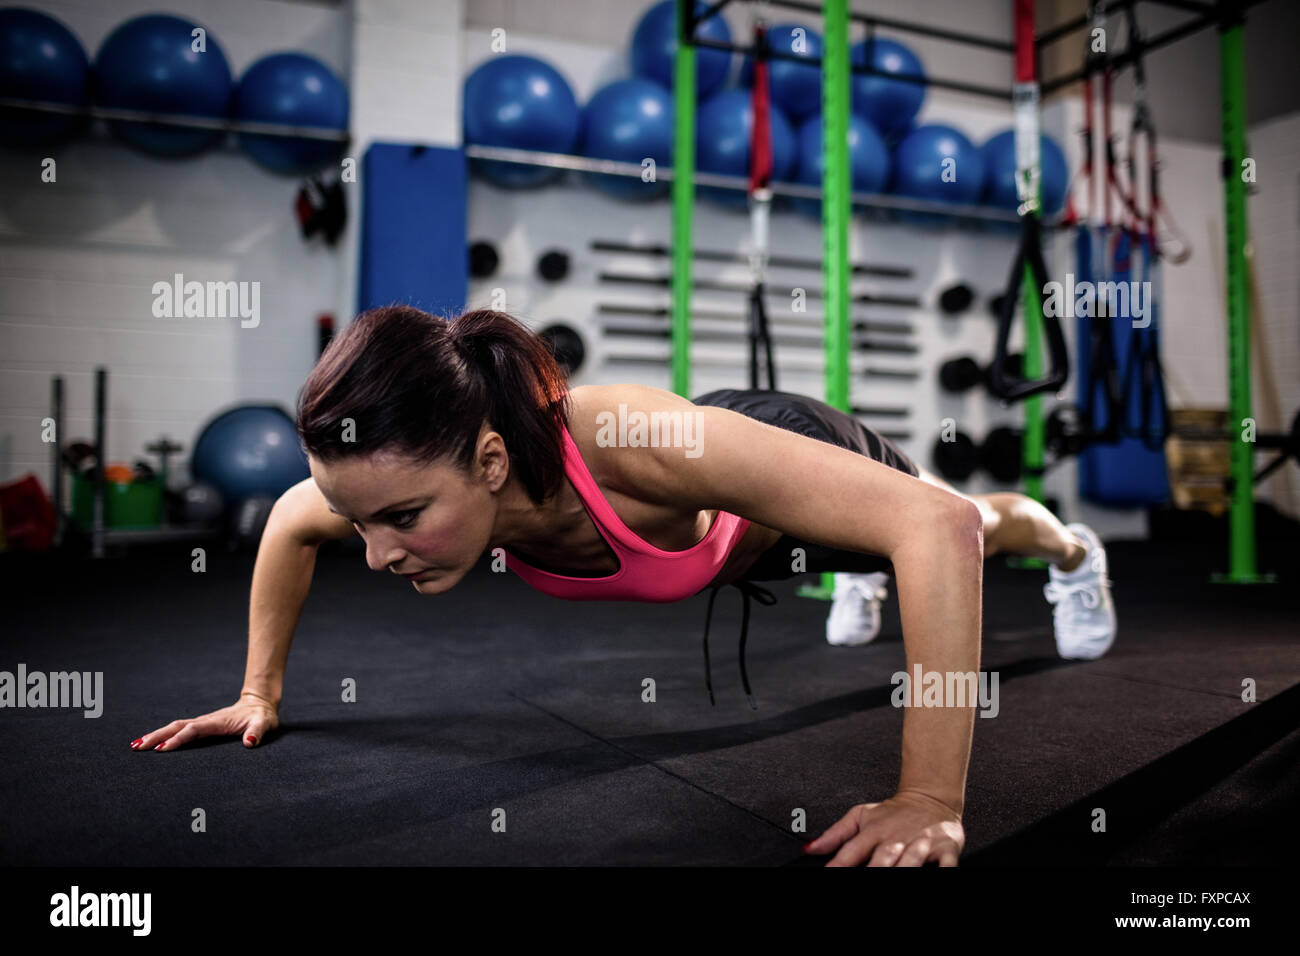 Determined woman doing push ups Stock Photo